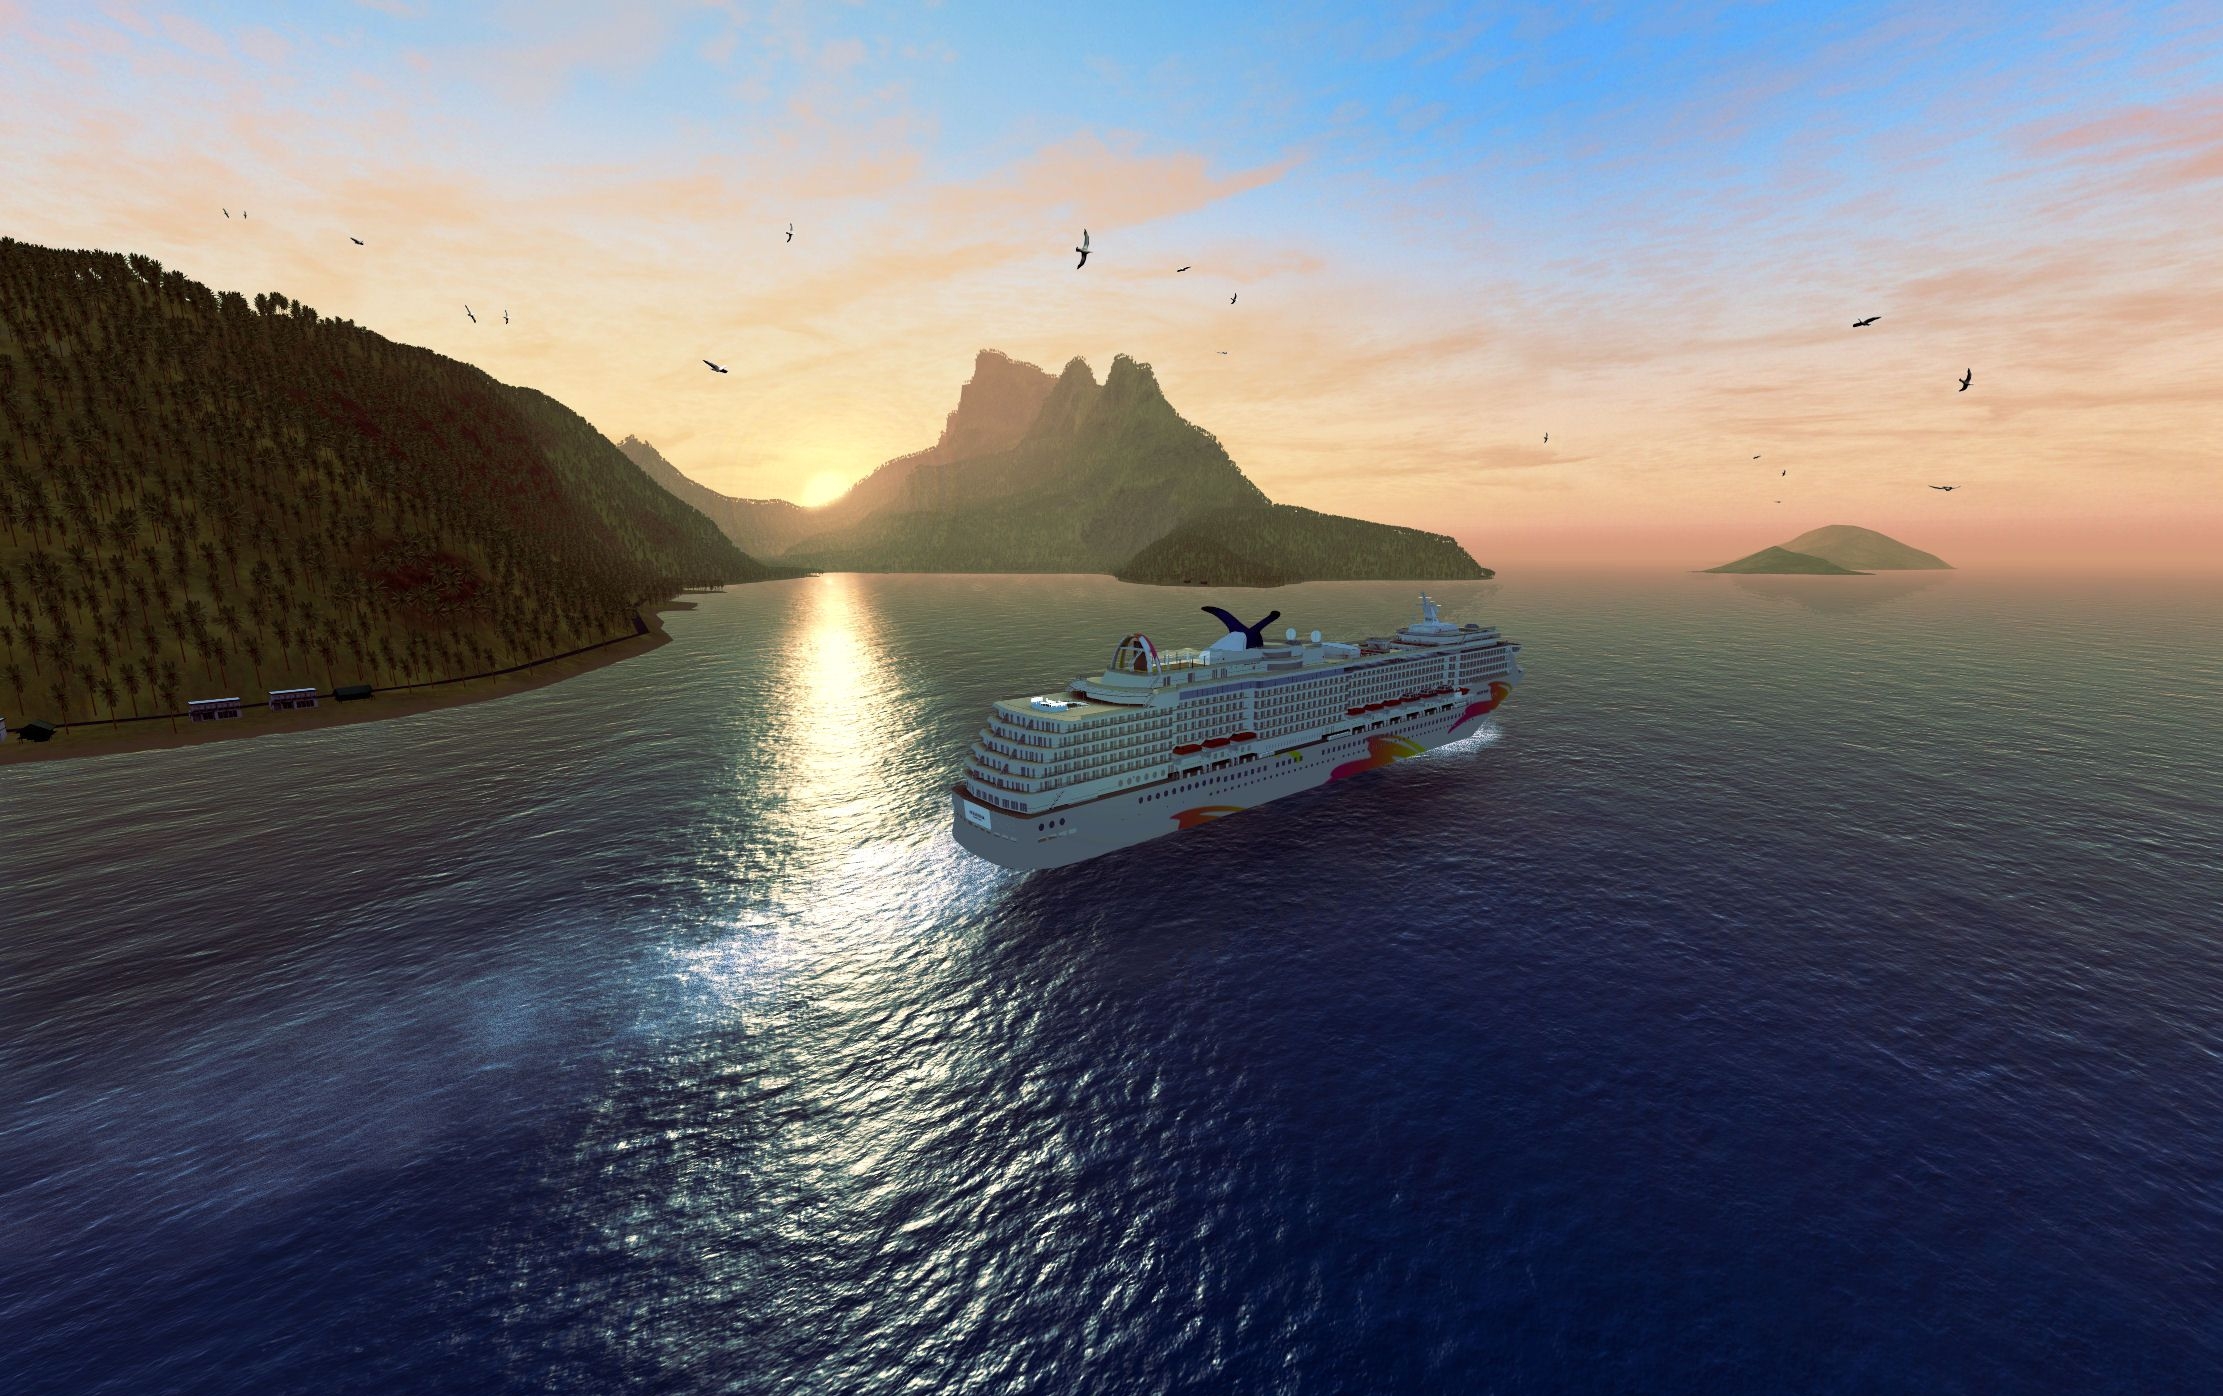 ship simulator extremes controller